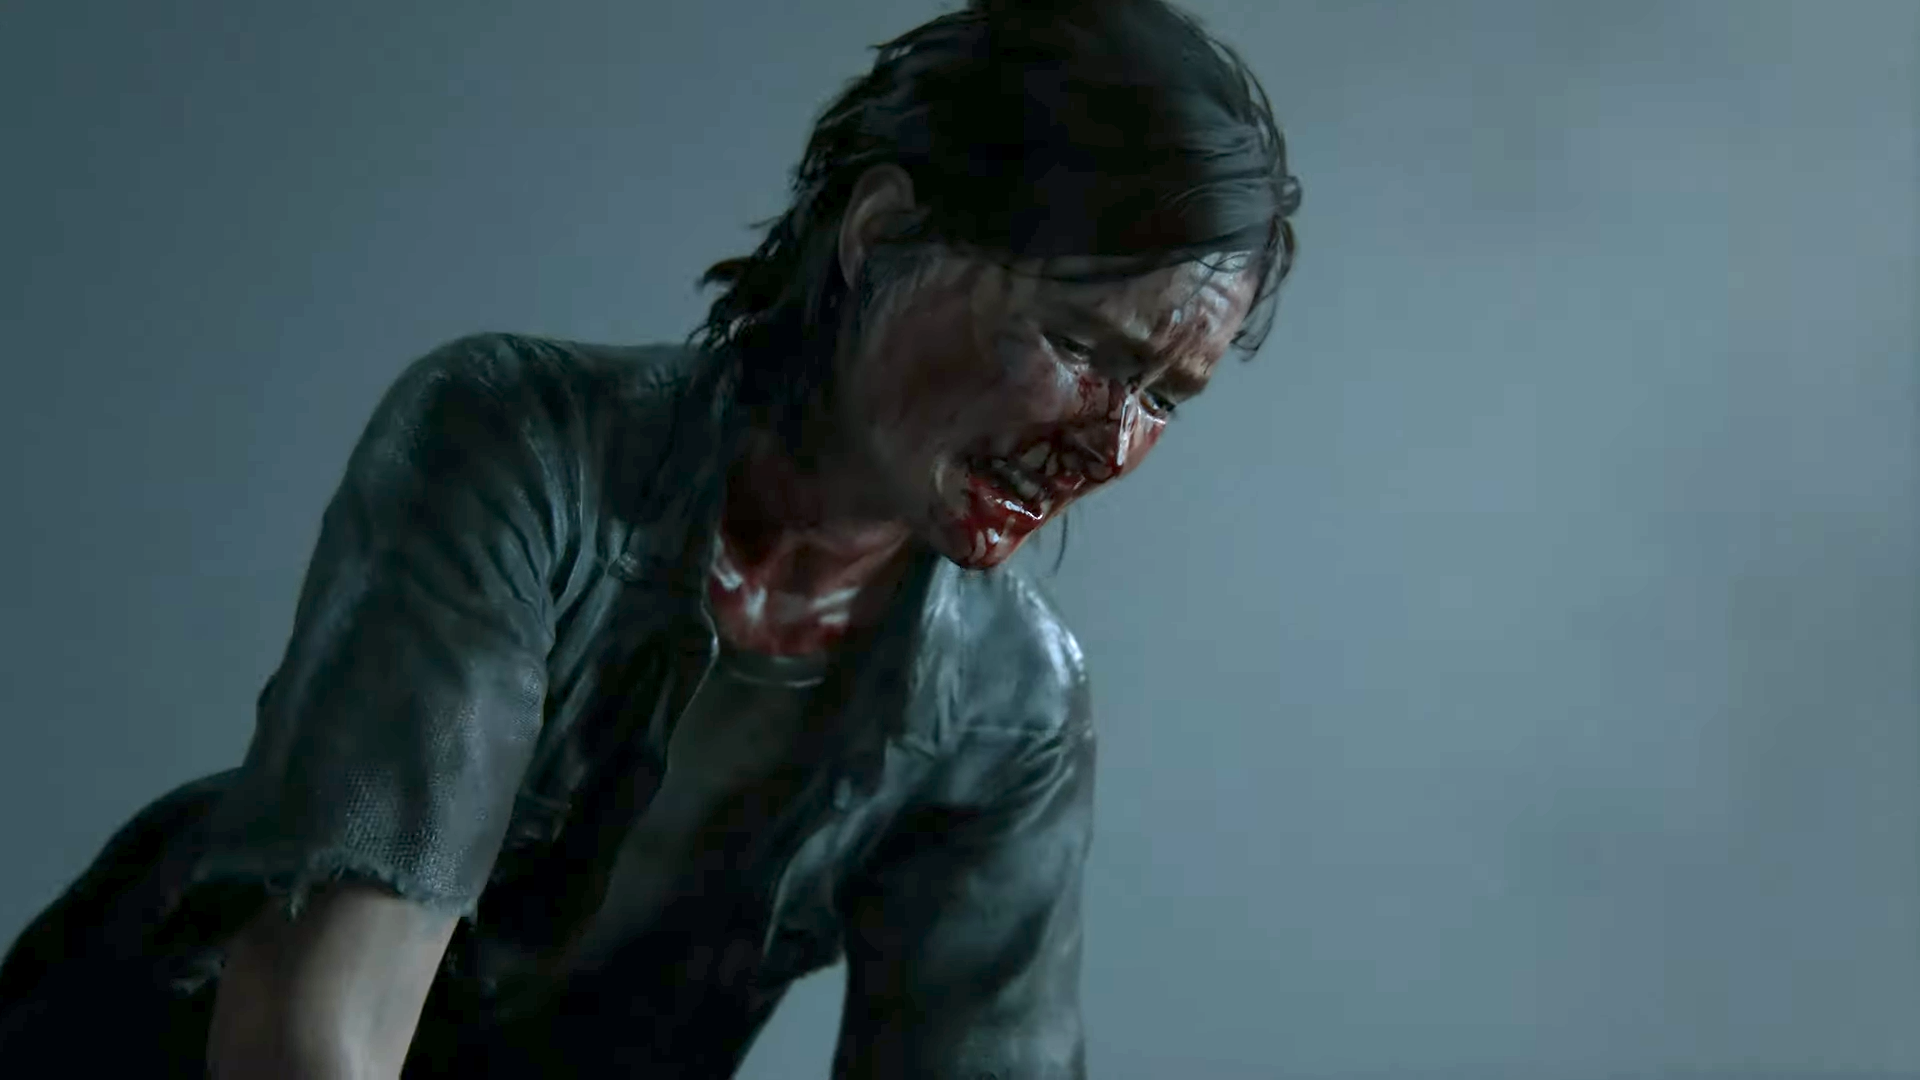 Last of Us Part 2' new trailer seemingly confirms major plot leaks